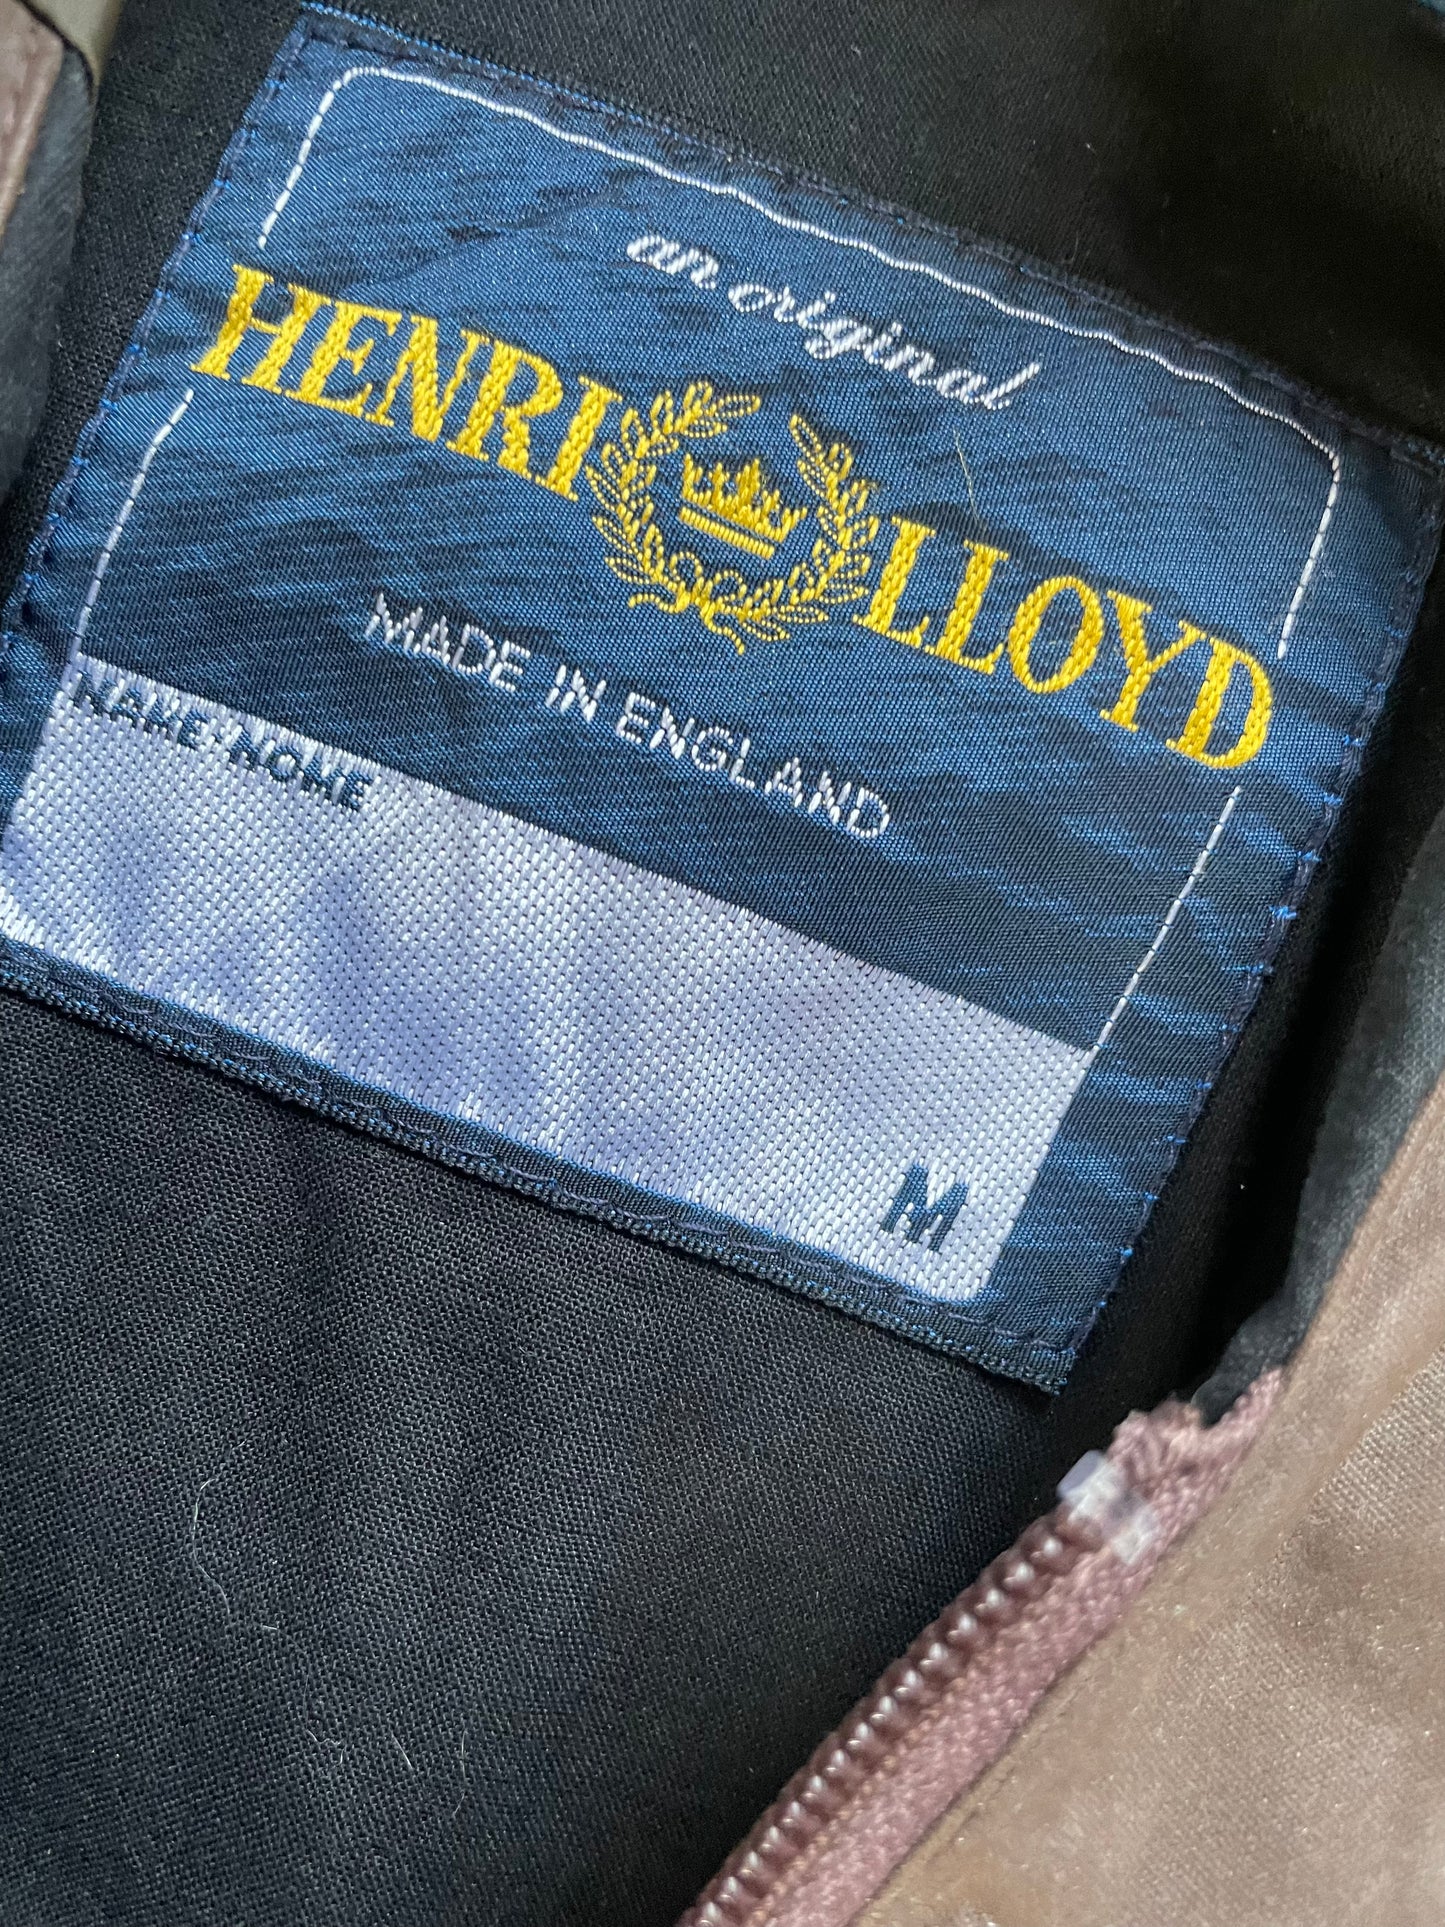 90s Henri Lloyd Waxed sailing jacket (M)